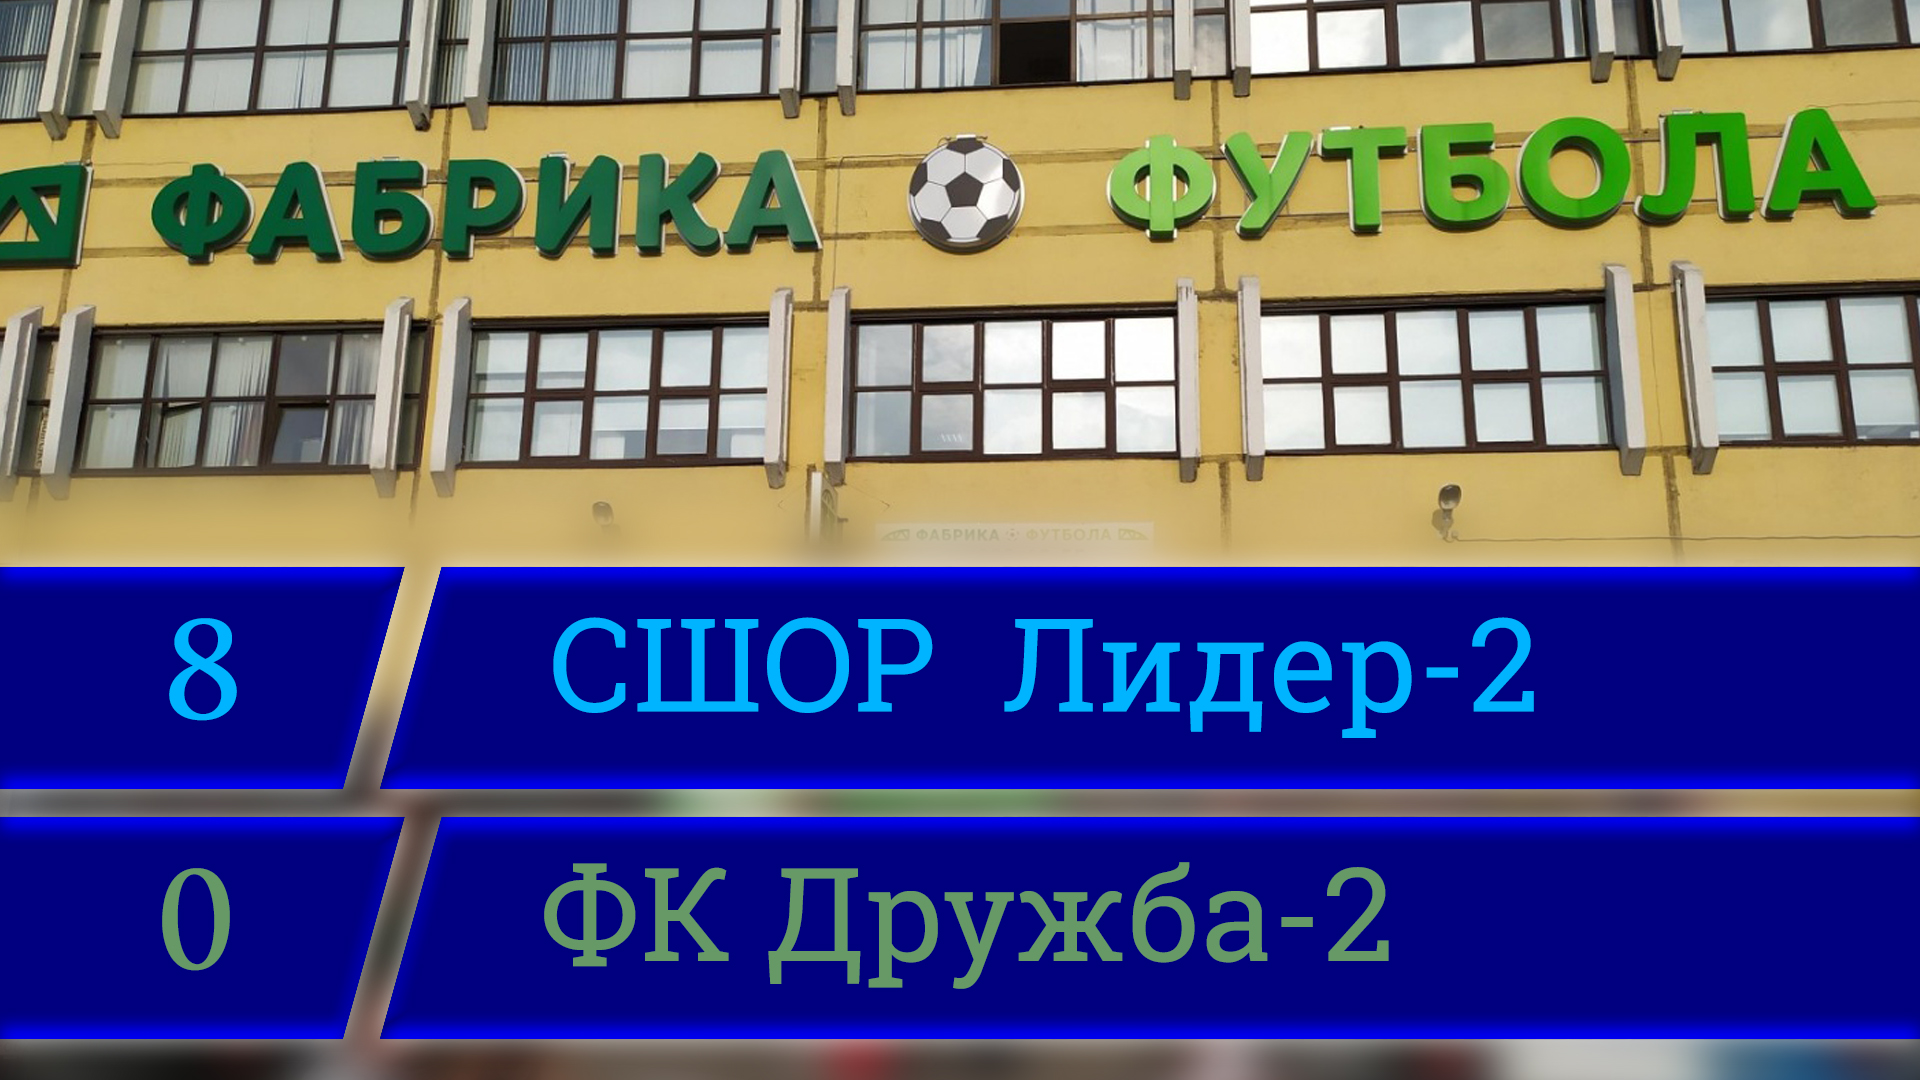 СШОР Лидер-2 - ФК Дружба-2 (8:0), Турнир Sport Is Life, Фабрика Футбола, 07.03.2022